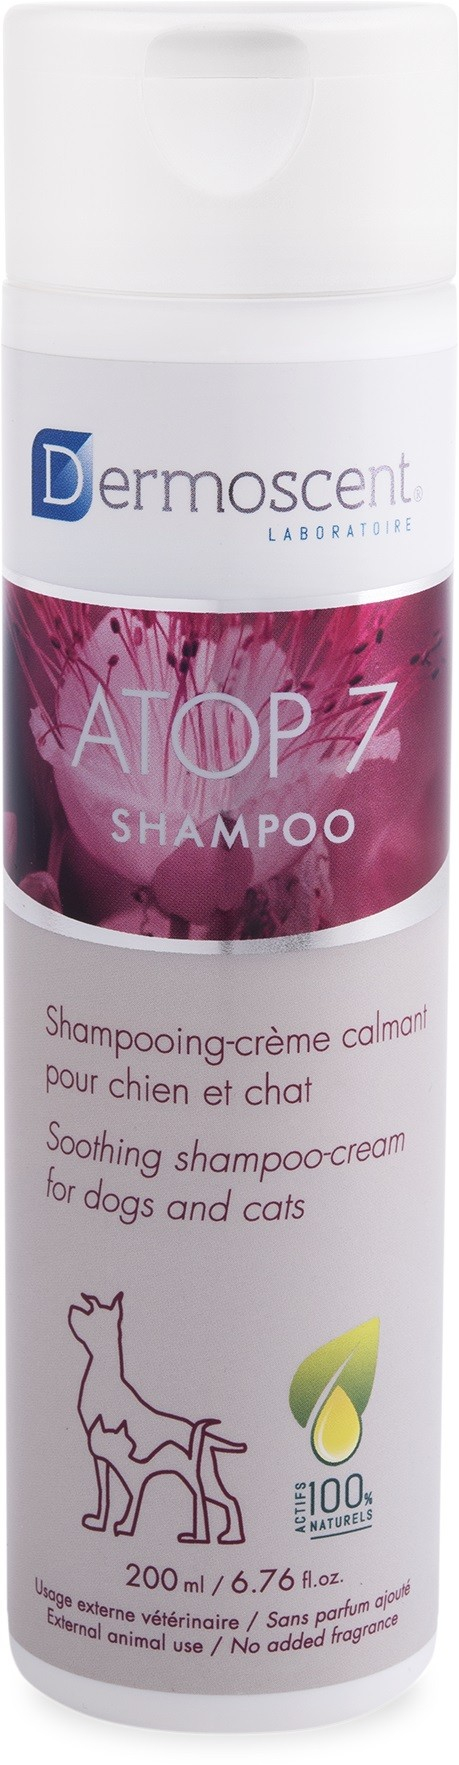 Dermoscent Atop 7 Shampoo-crème